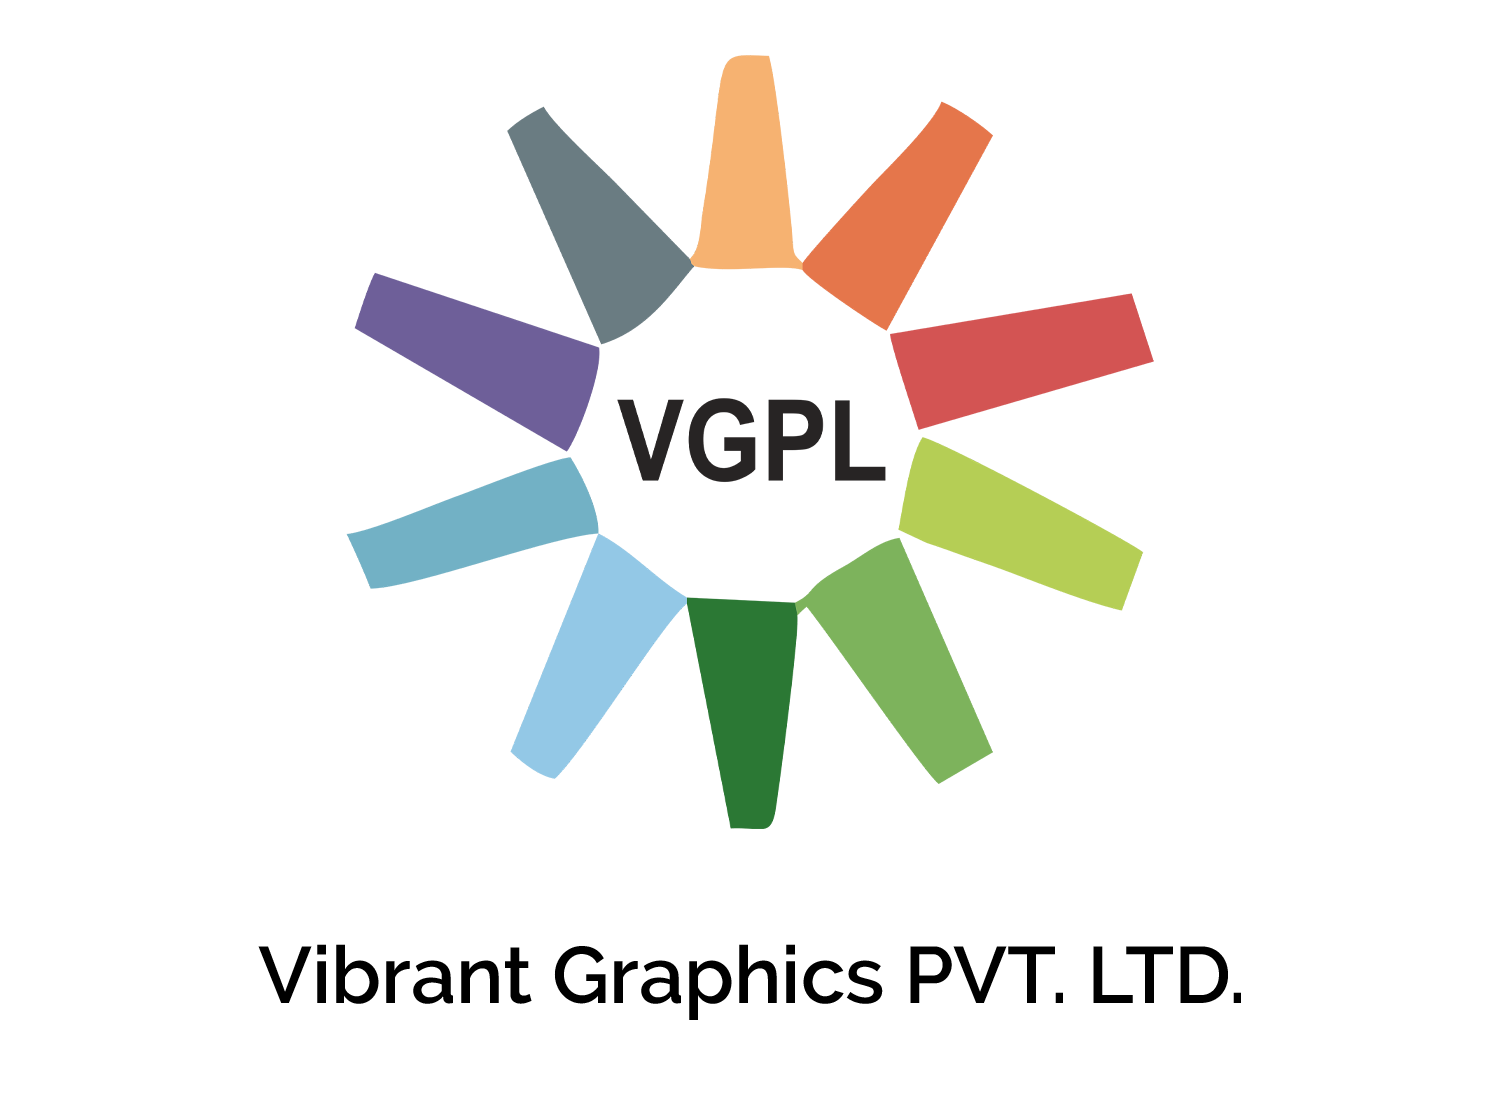 VGPL International Limited